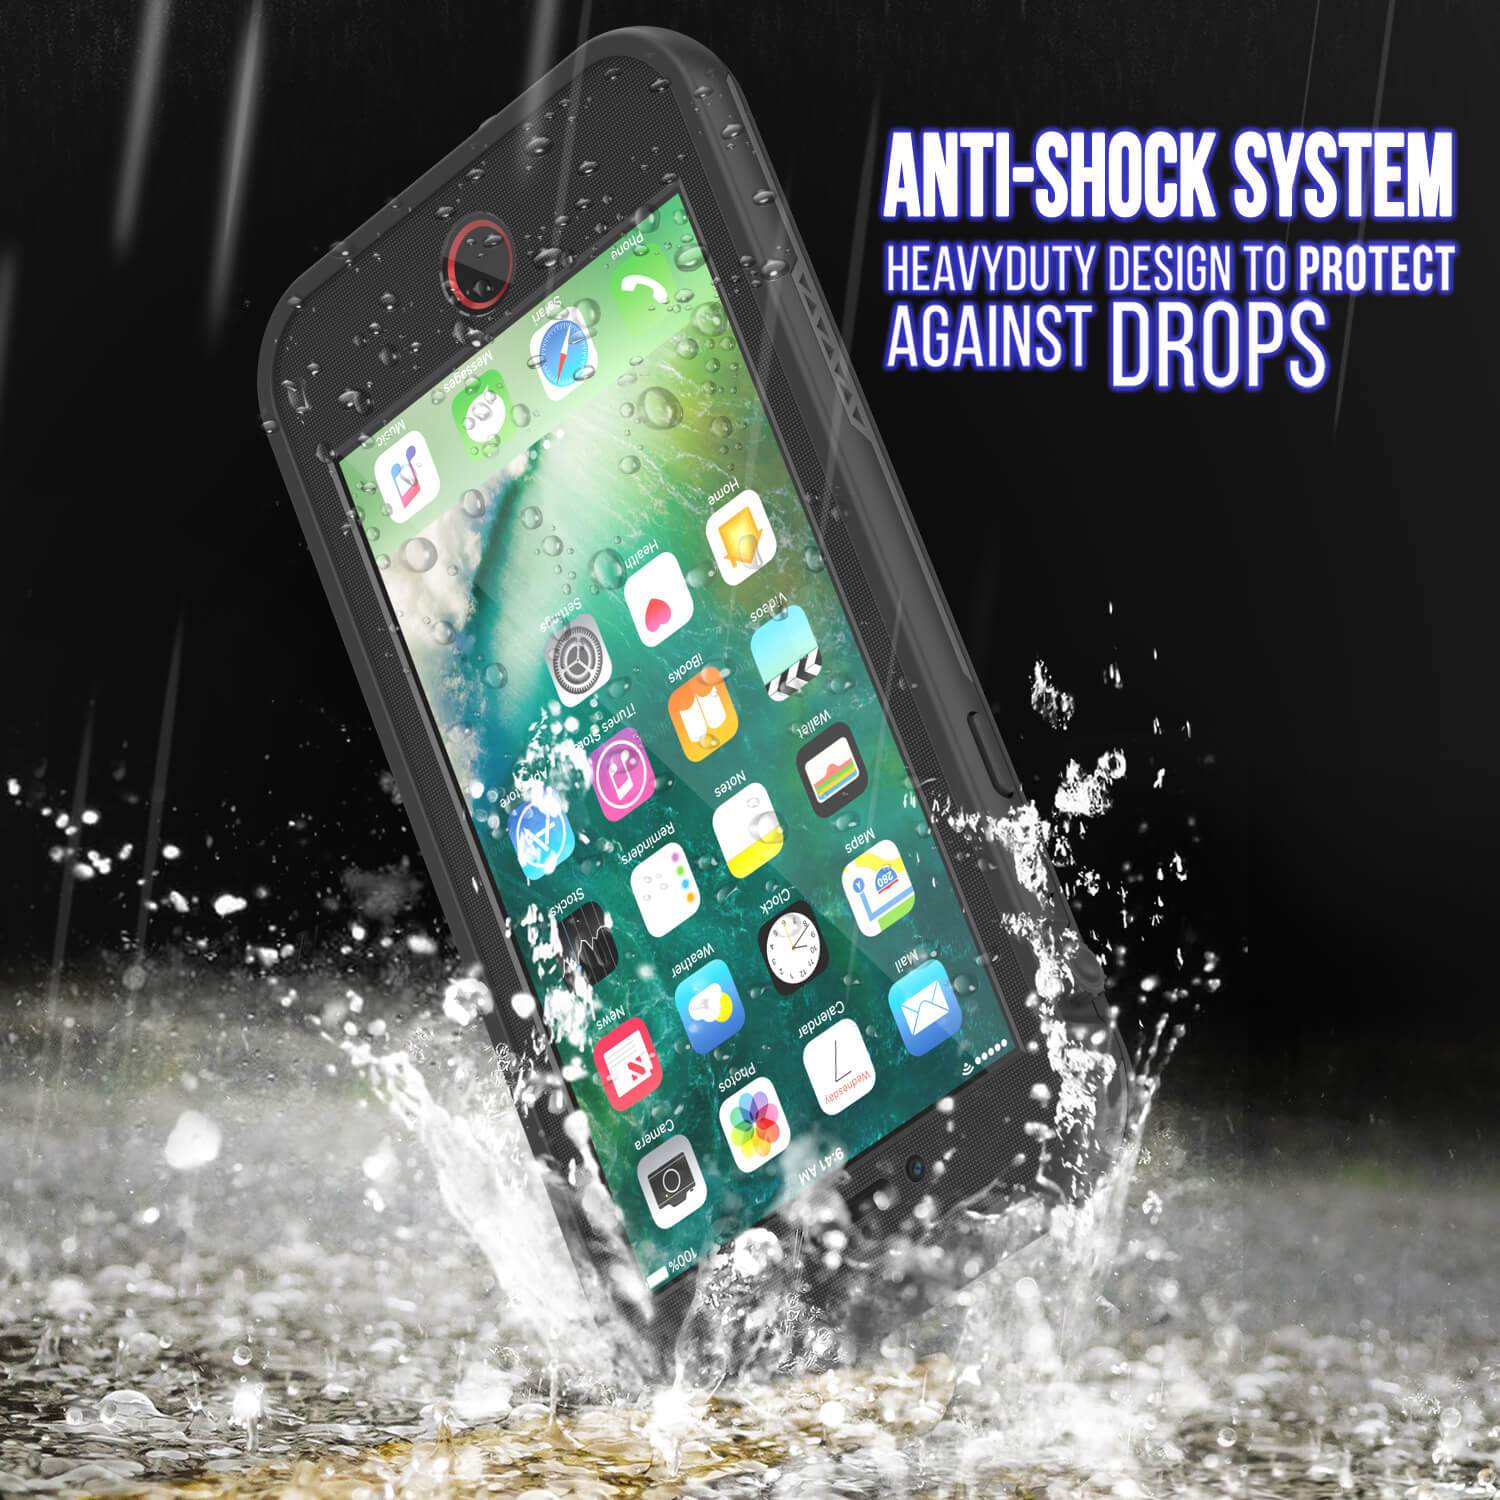 iPhone 7 Waterproof Case, Punkcase SpikeStar Black Series | Thin Fit 6.6ft Underwater IP68